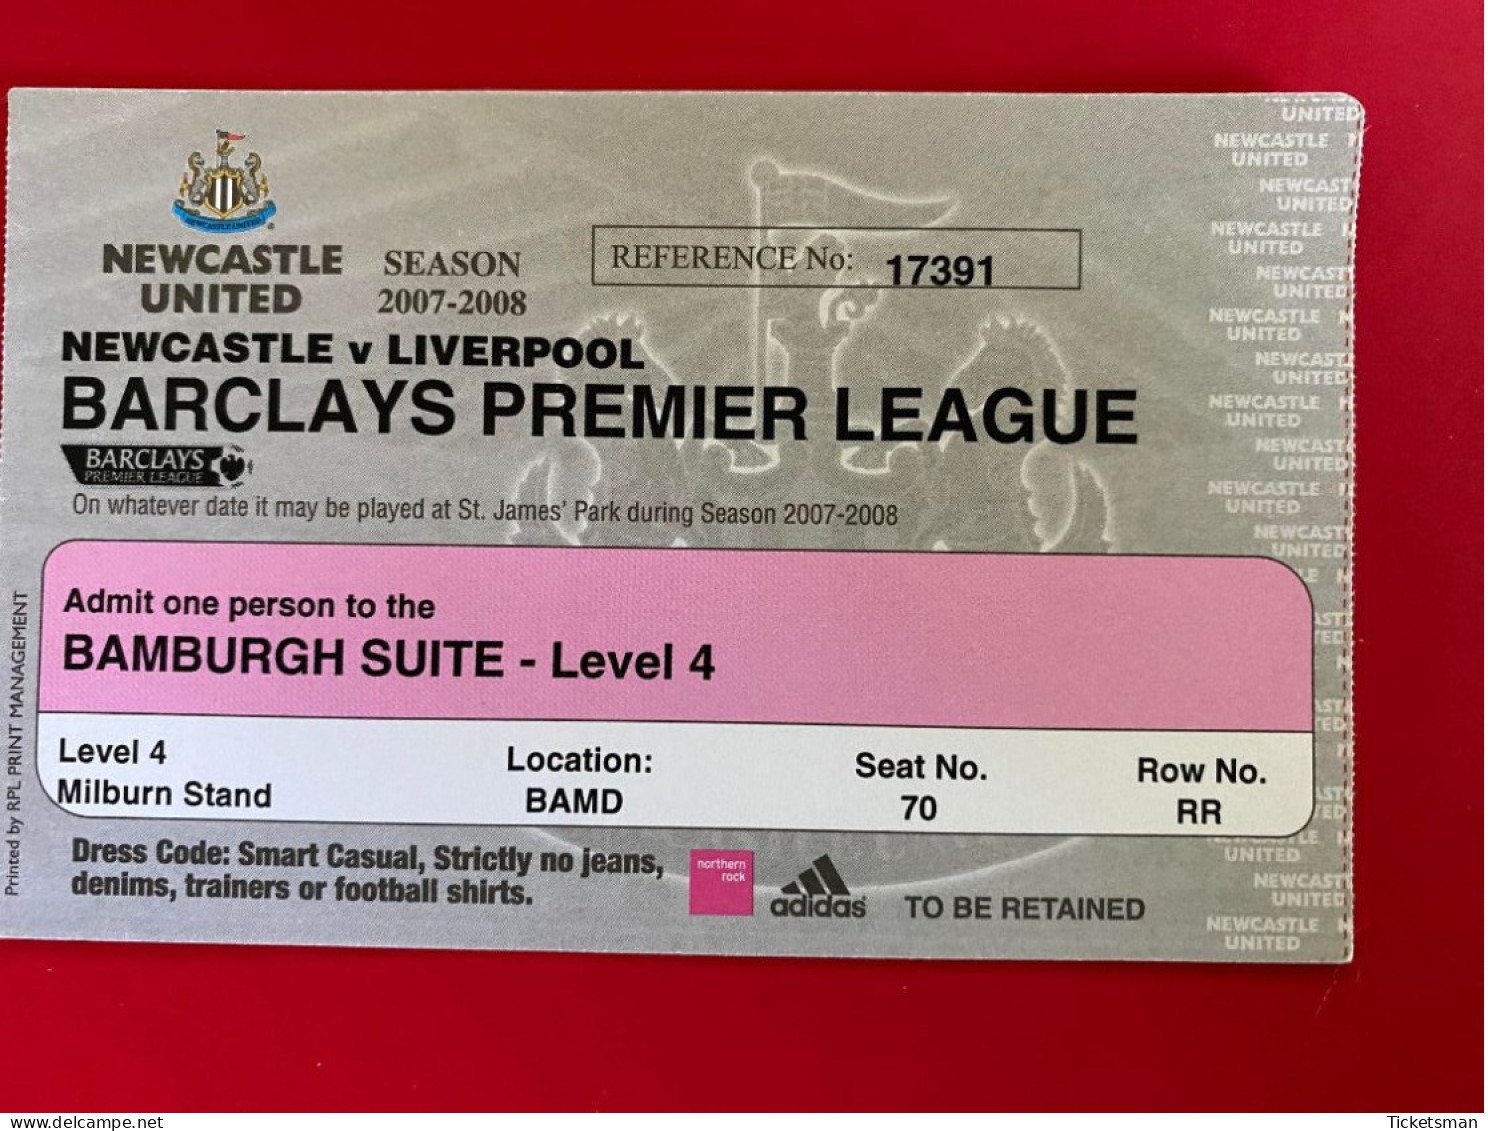 Football Ticket Billet Jegy Biglietto Eintrittskarte Newcastle UTD - Liverpool FC 2007/08 - Tickets D'entrée